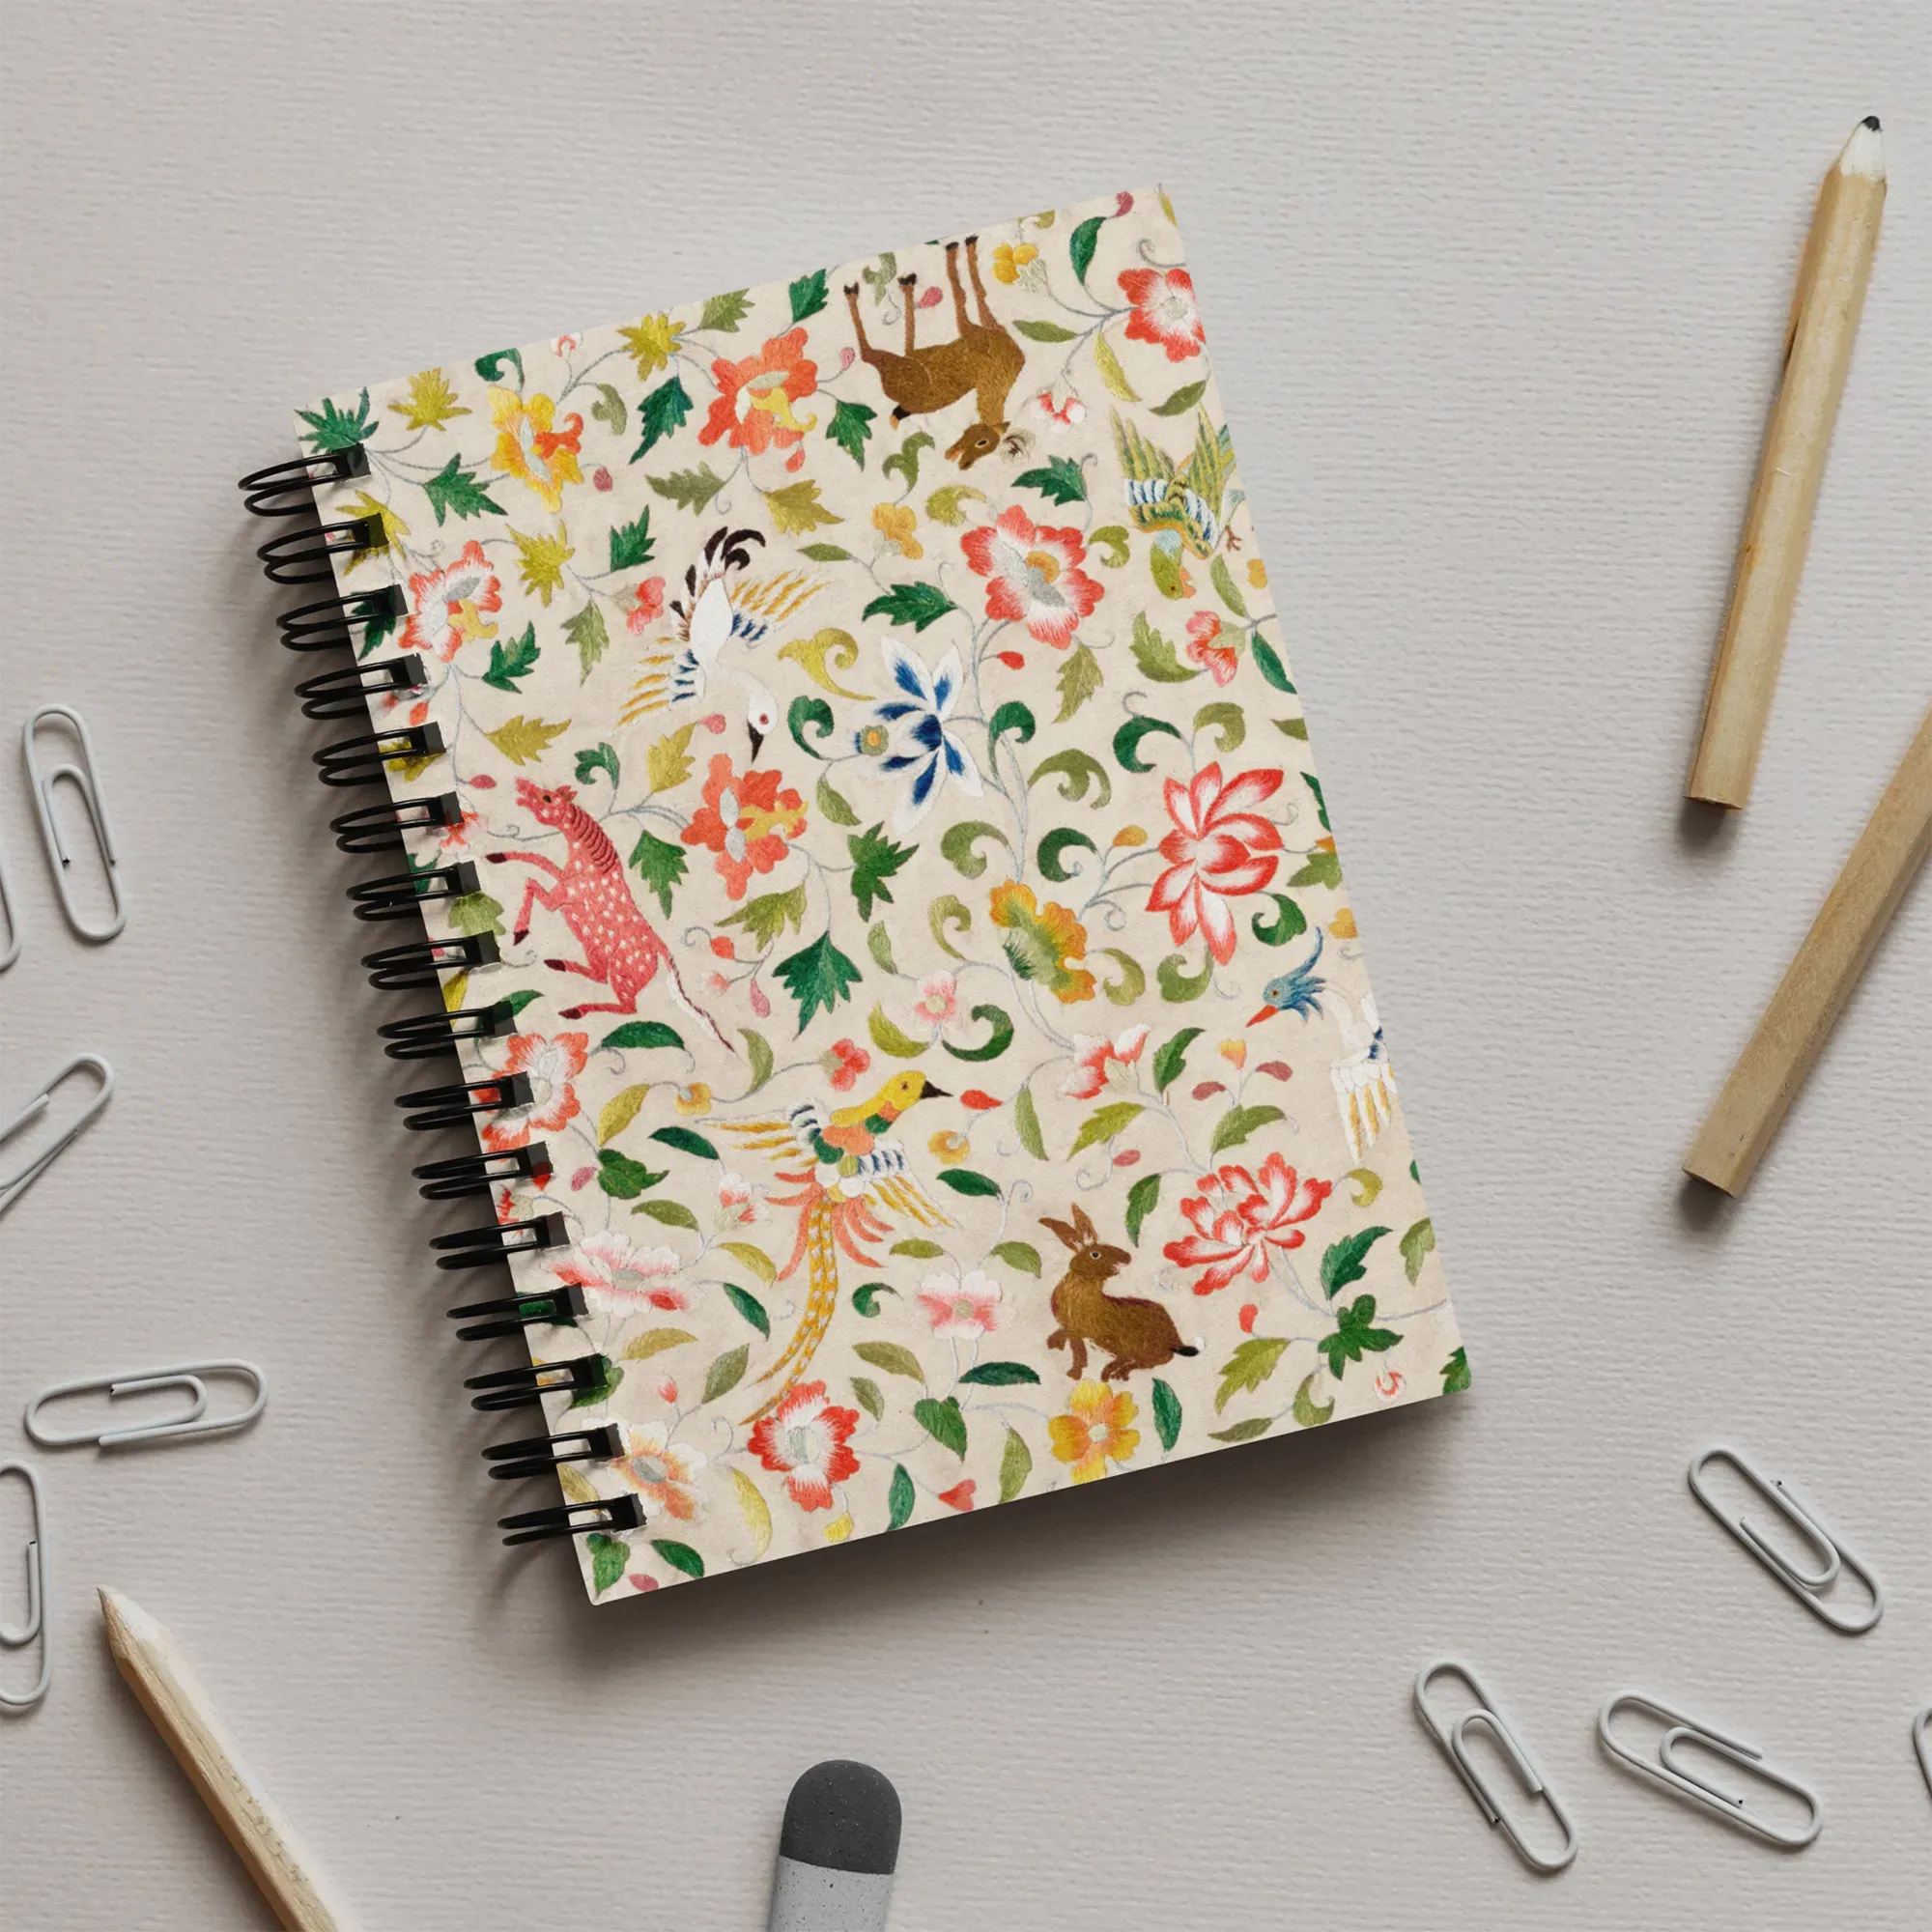 Crittersweet Symphony - Decorative Asian Fabric Art Notebook - Notebooks & Notepads - Aesthetic Art